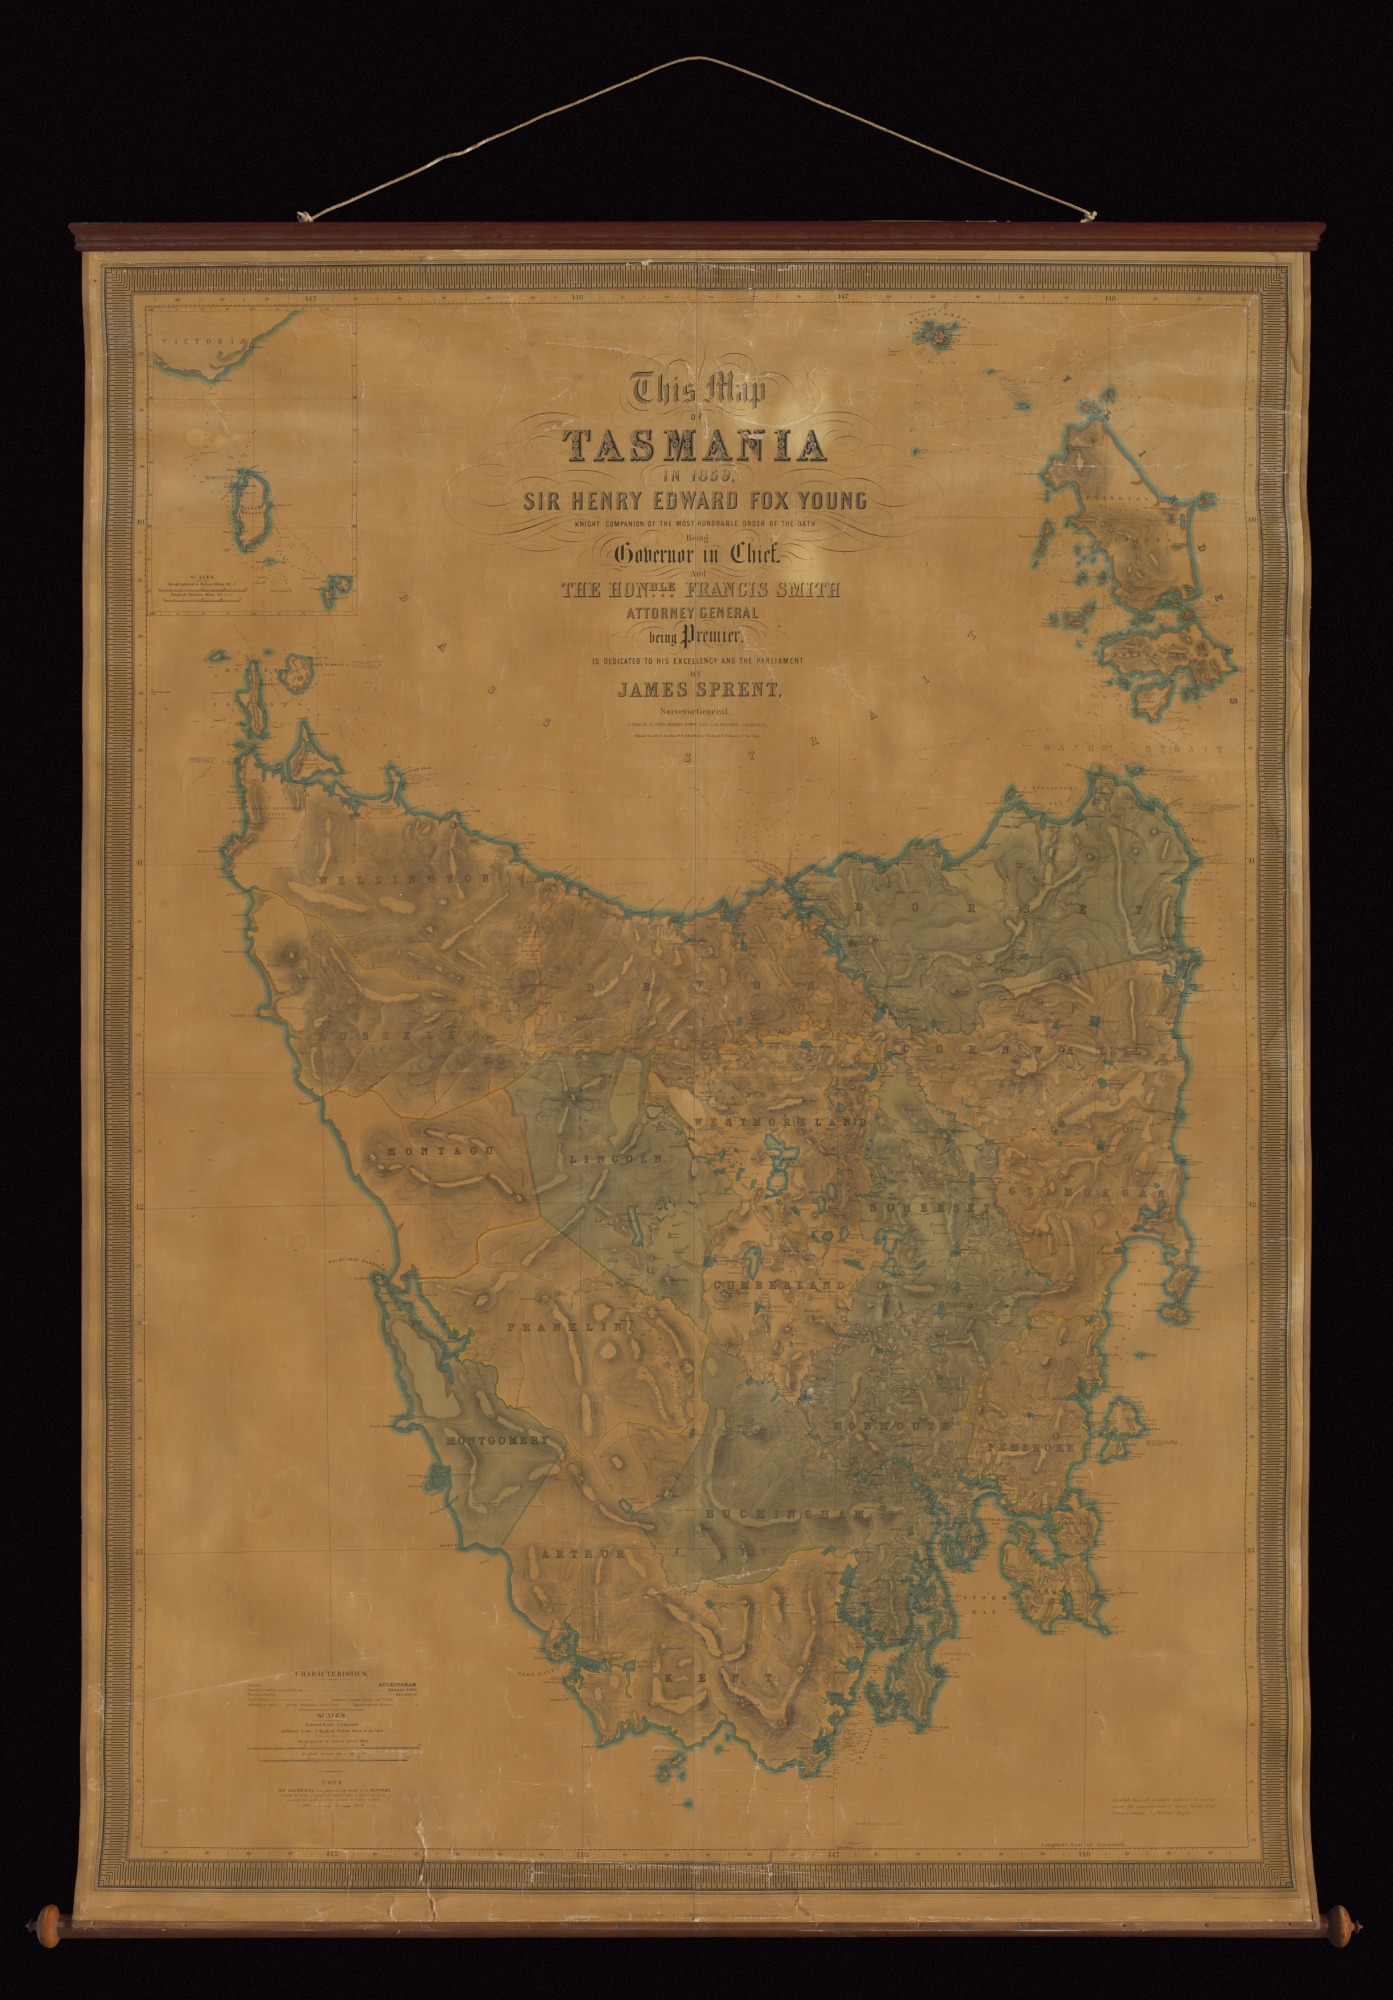 <p>Map of Tasmania by James Sprent, 1859</p>
